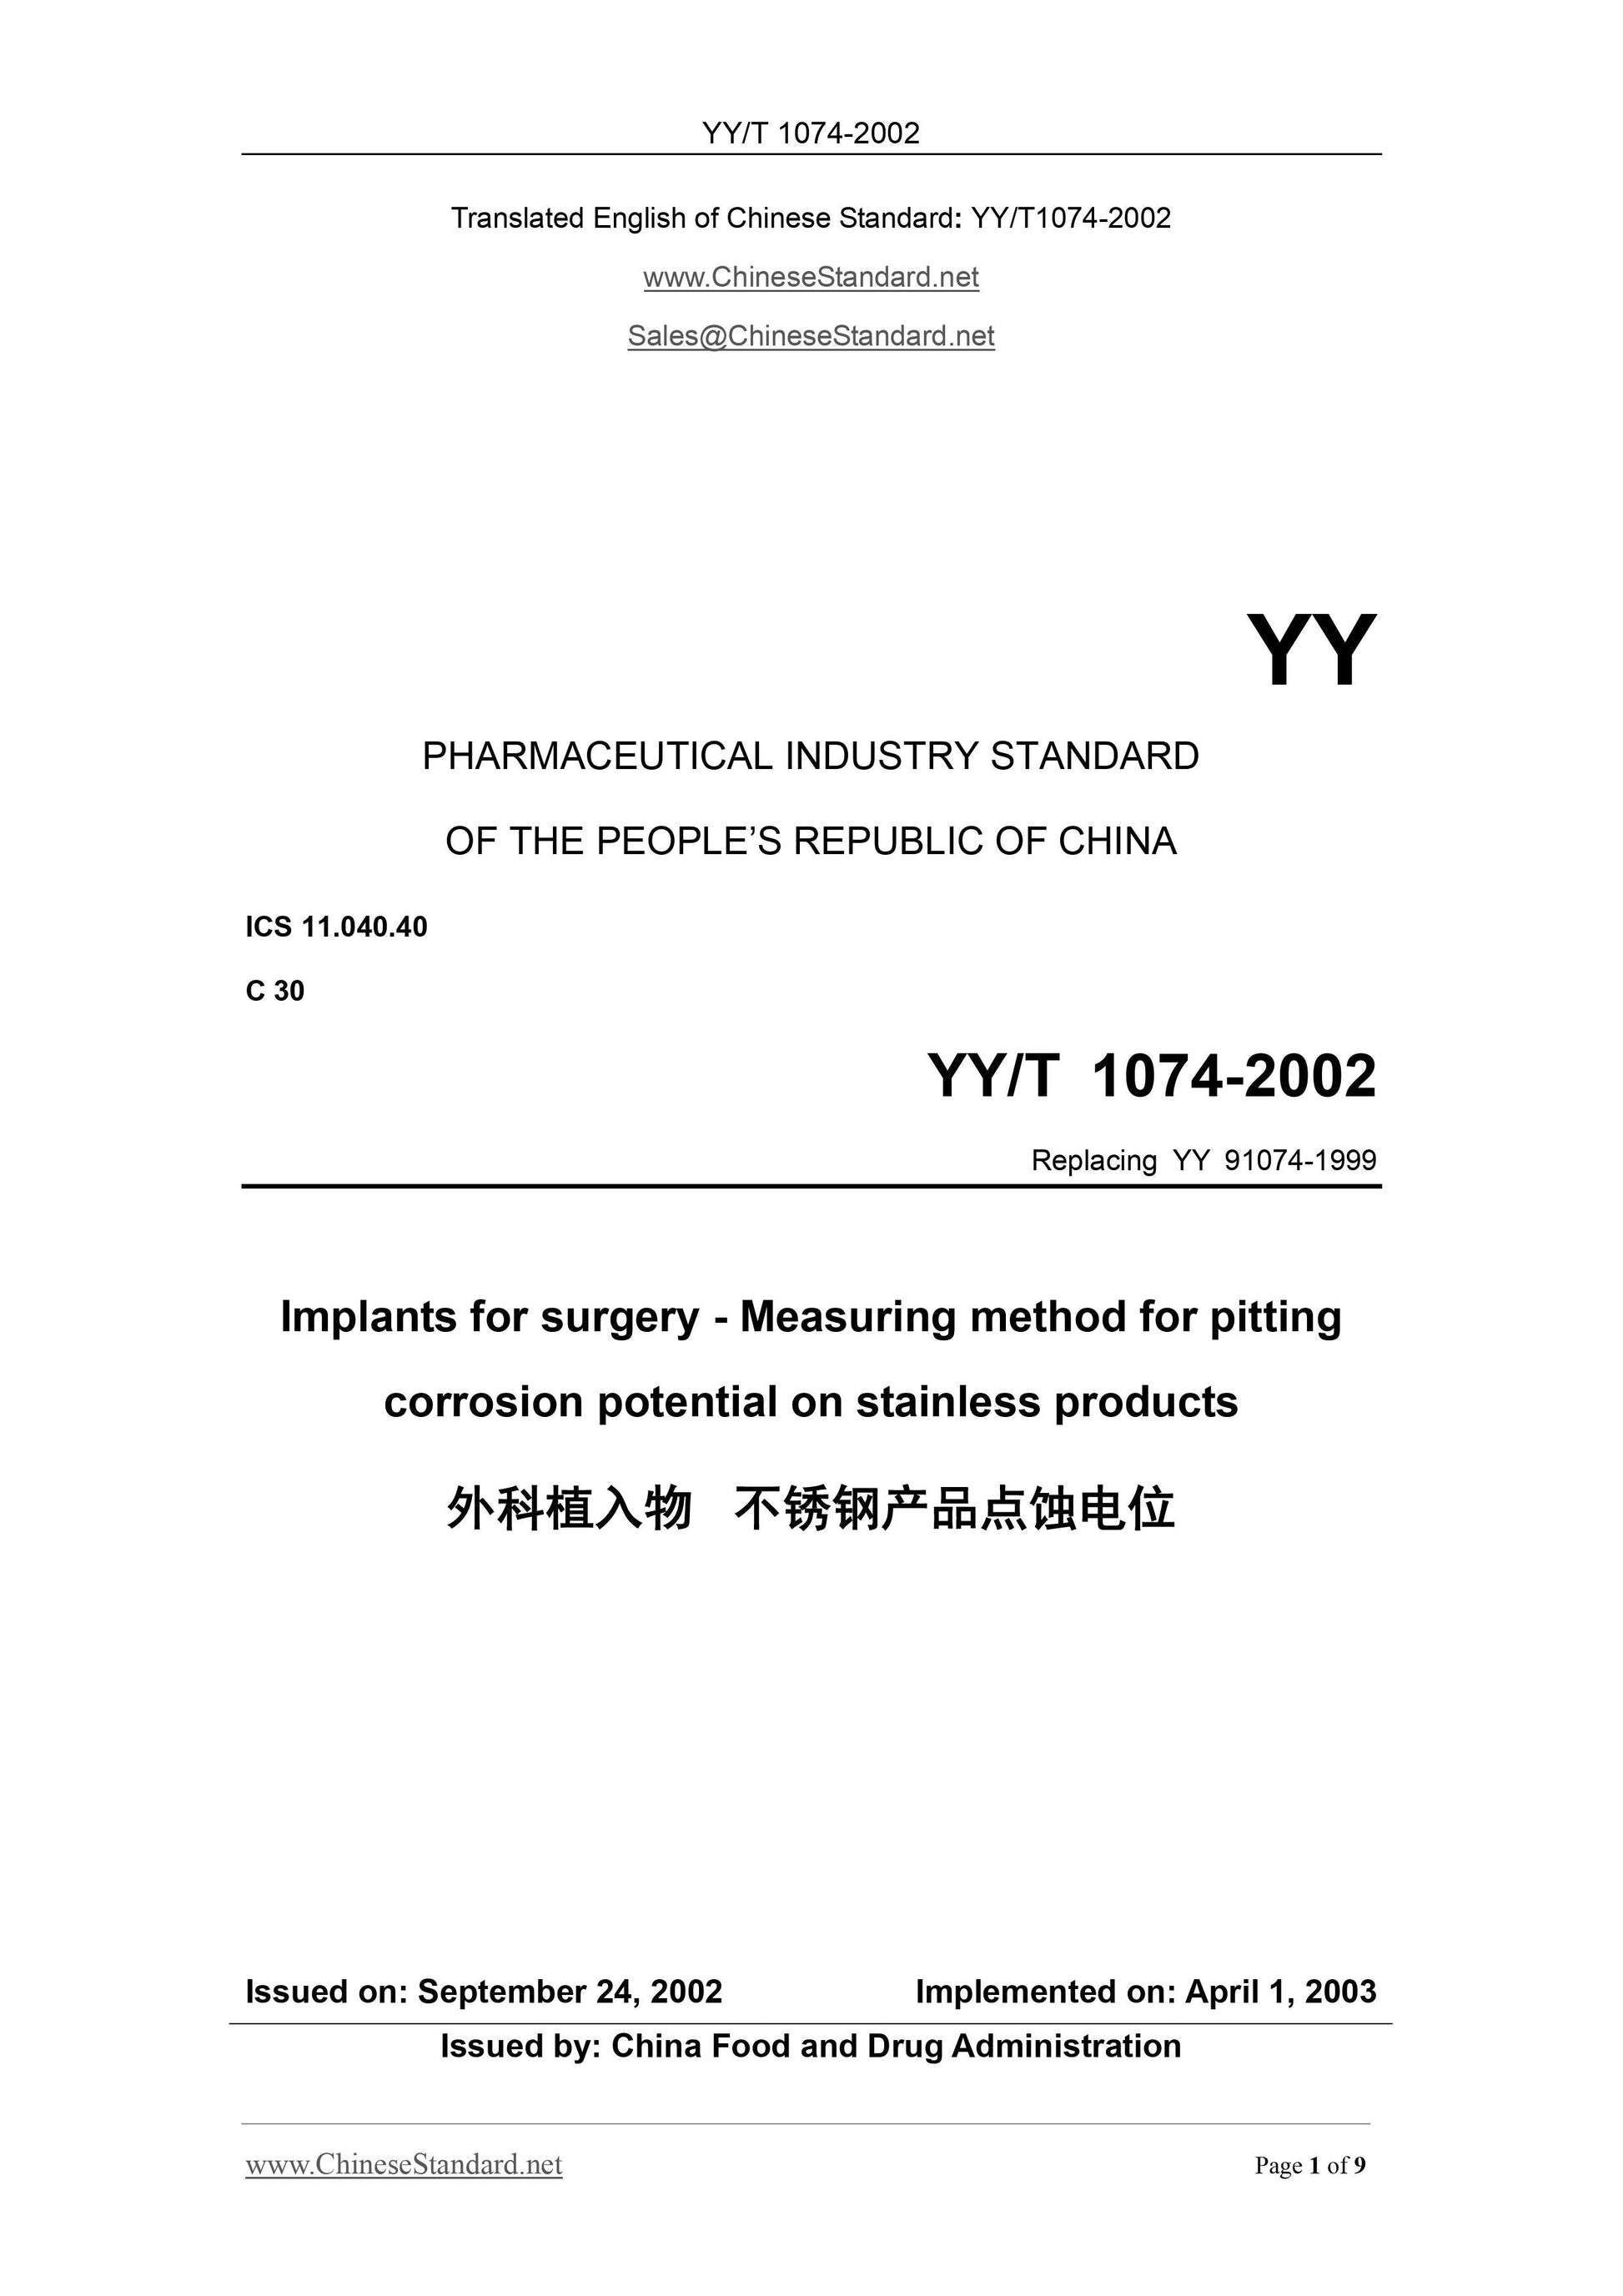 YY/T 1074-2002 Page 1